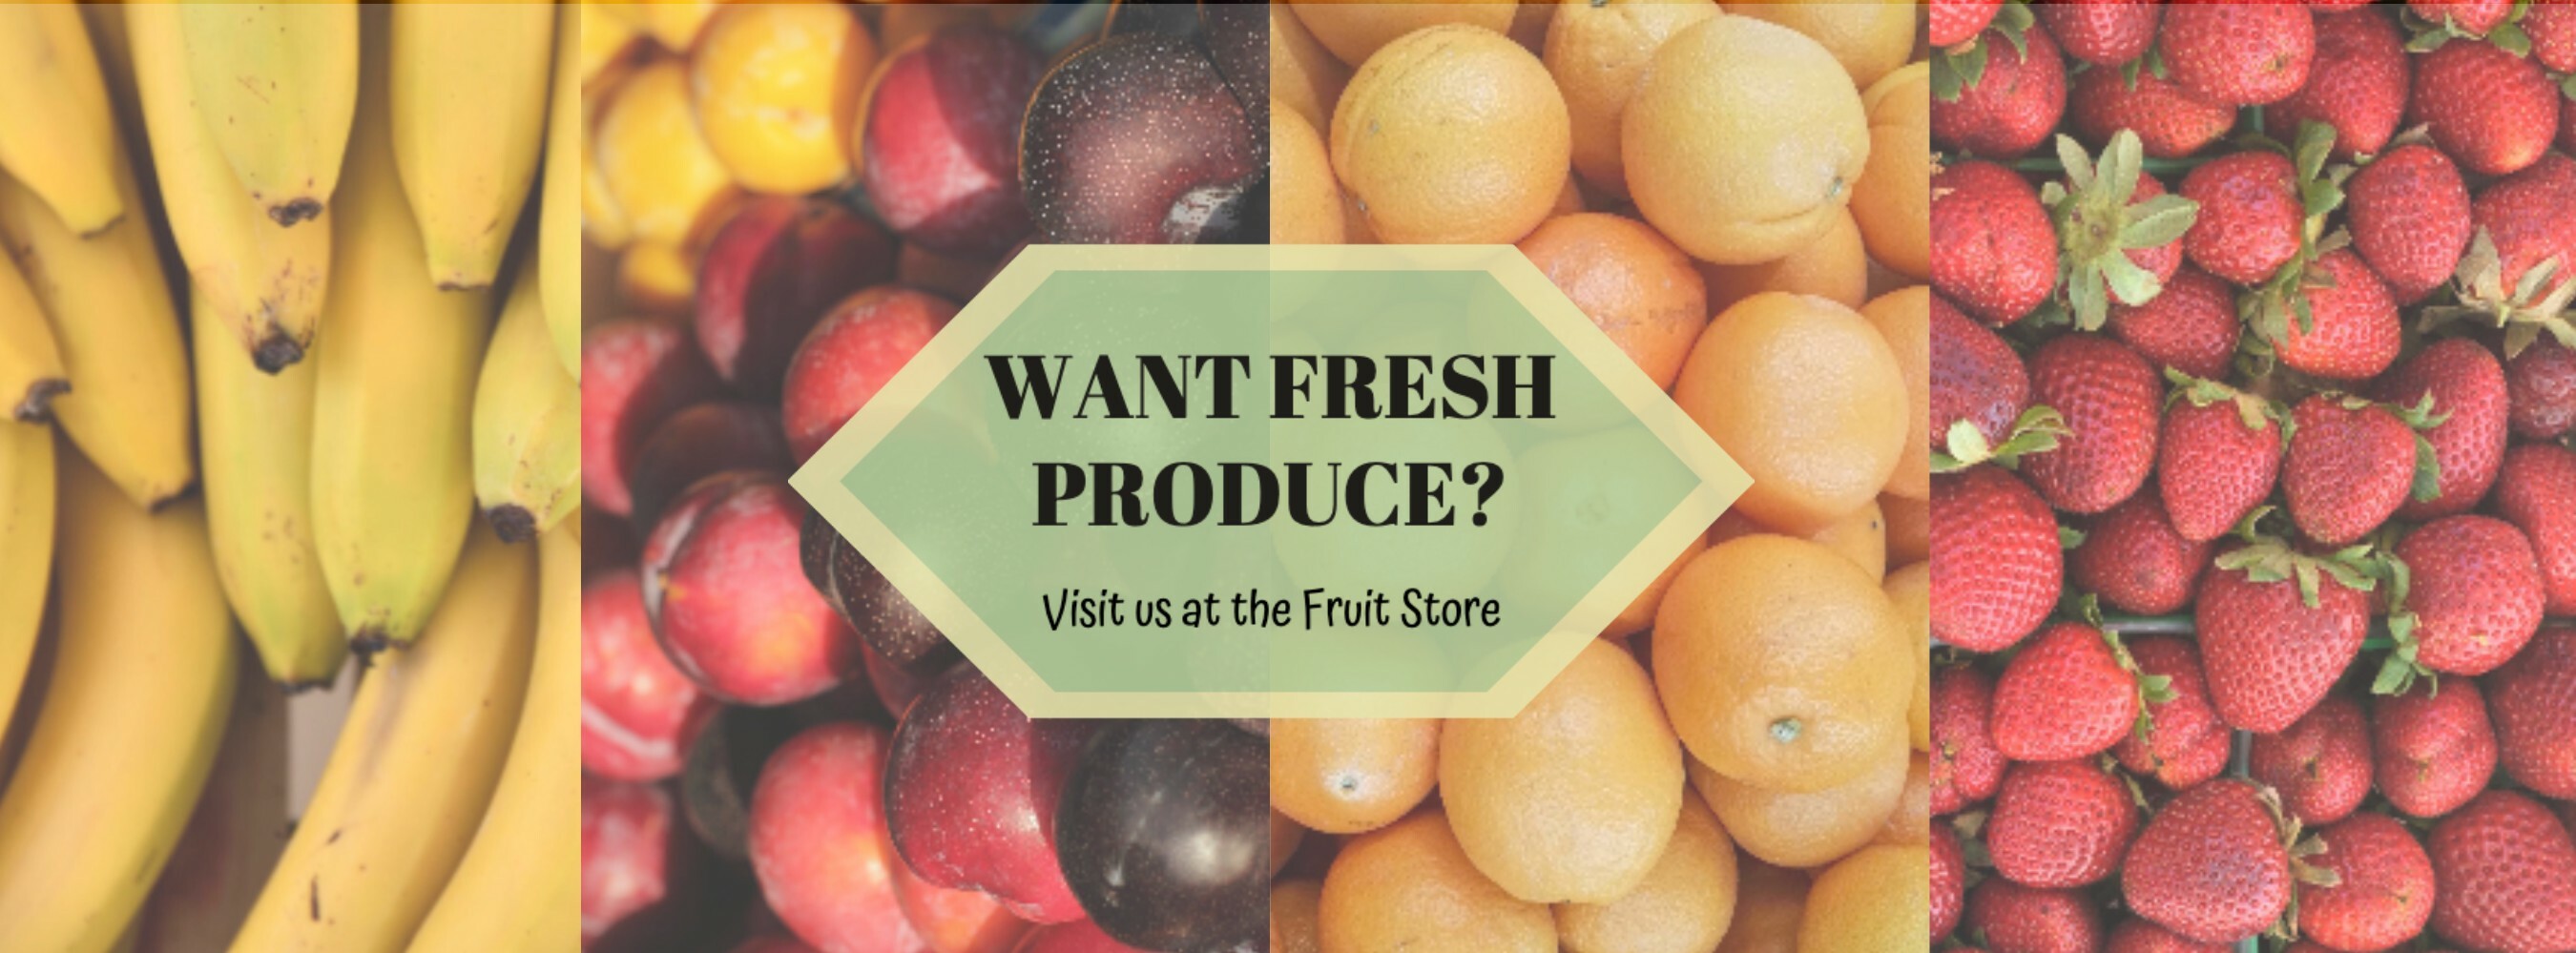 Fresh produce promo template